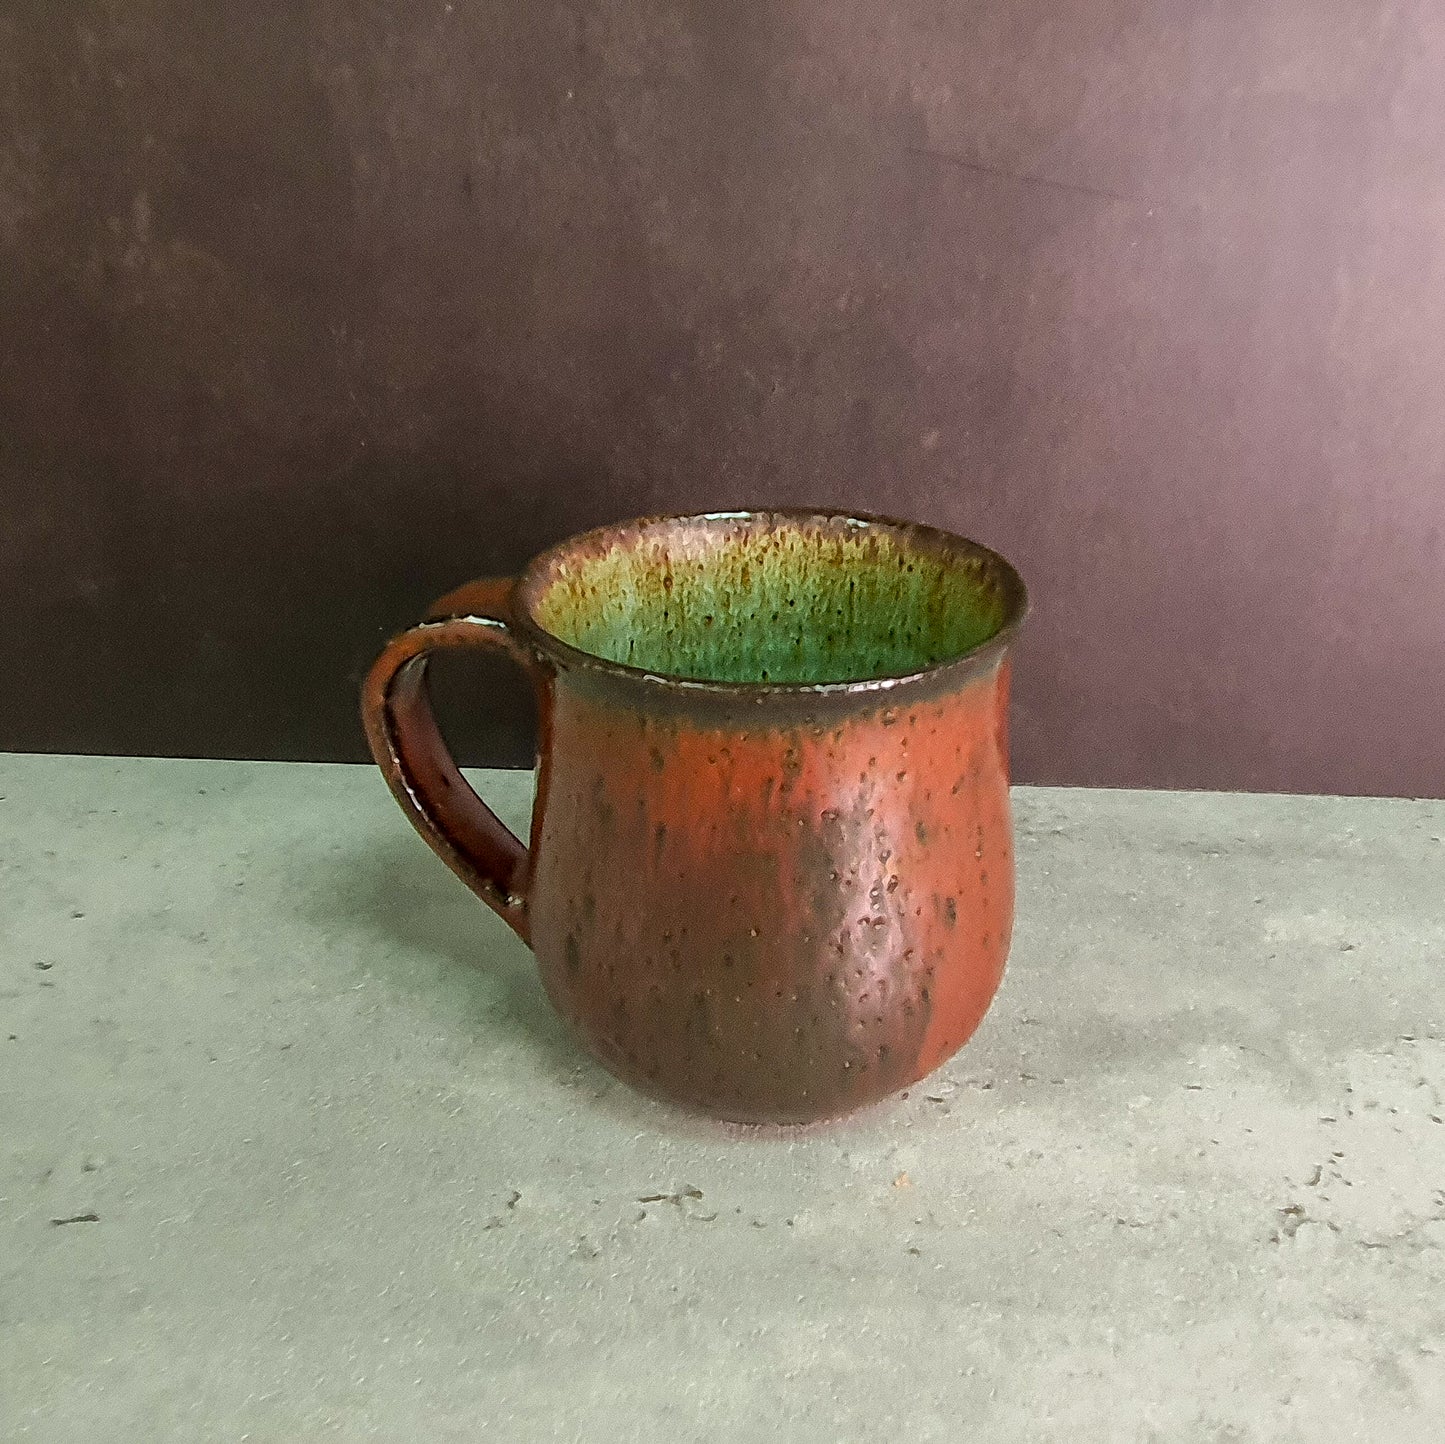 Dark Copper Mug